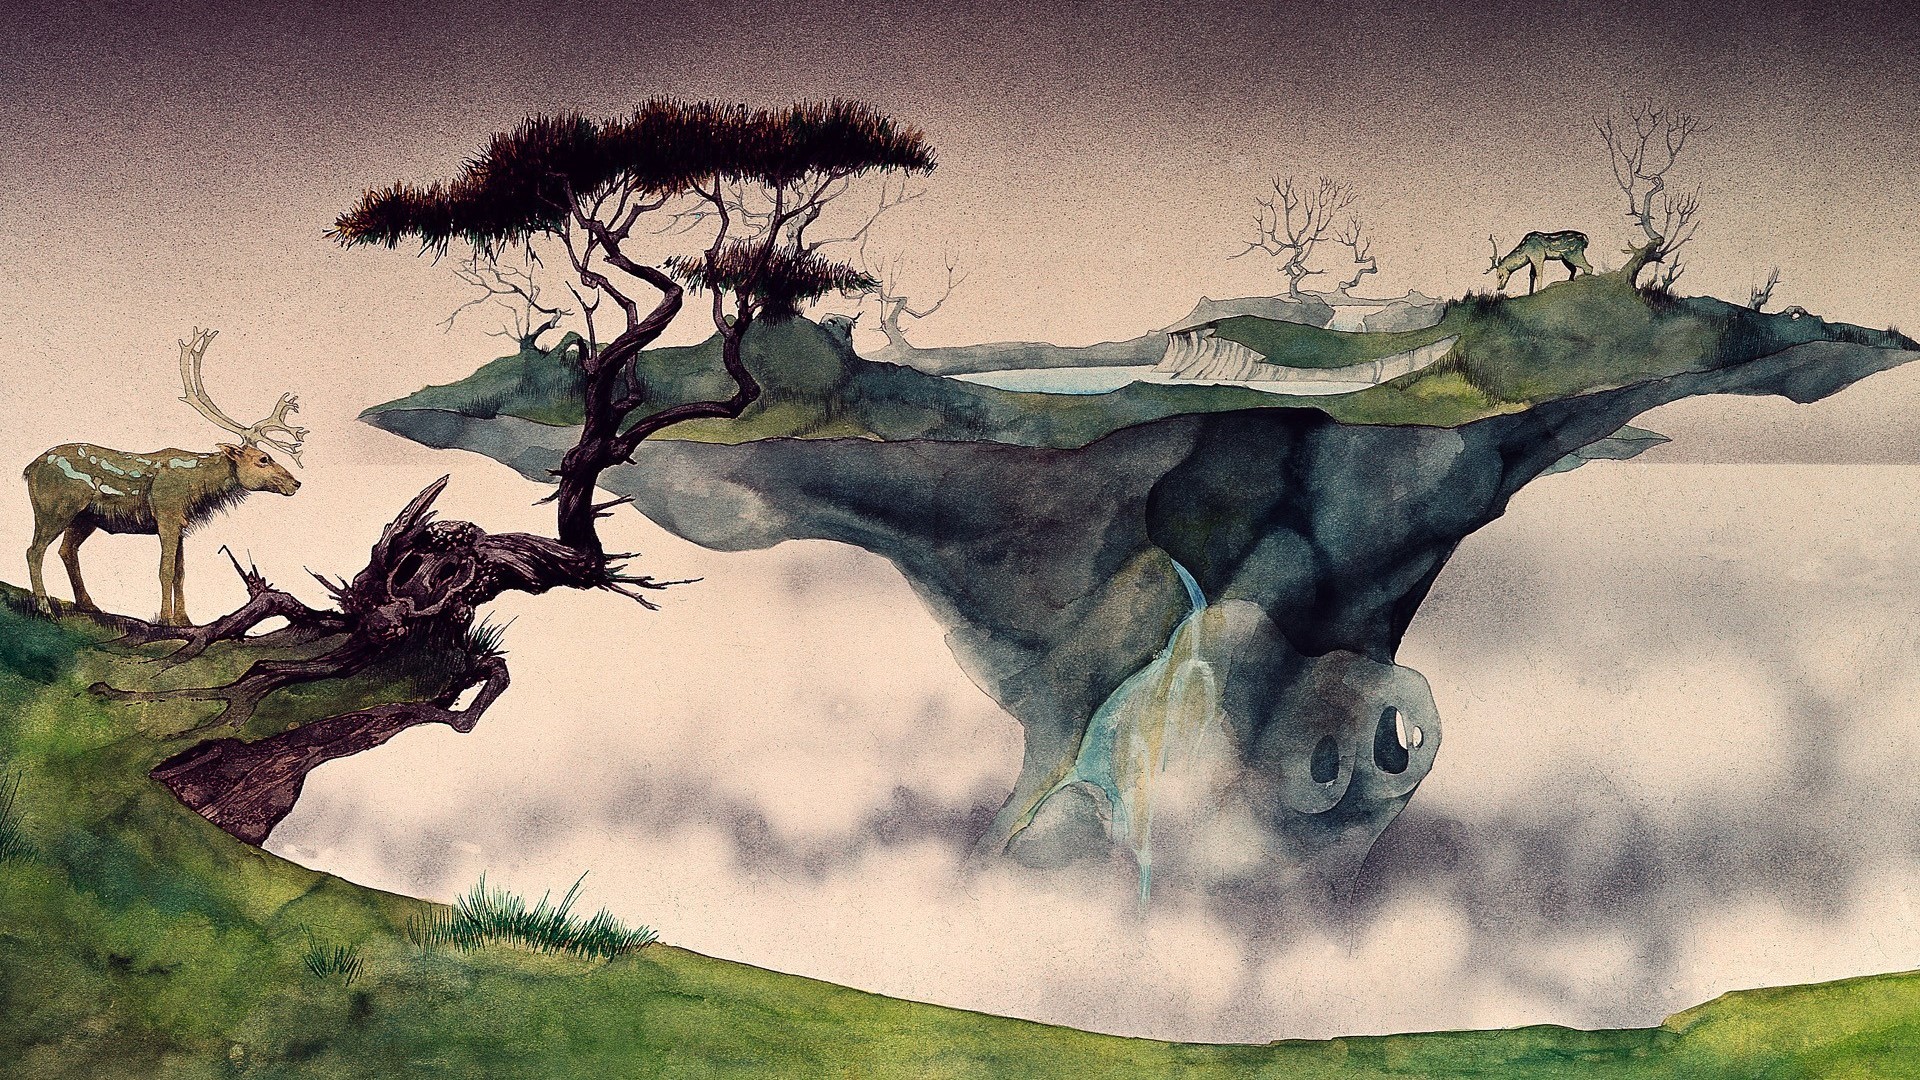 Fantasy Art Digital Art Floating Island Nature Animals Deer Trees Mist Lake Painting Watercolor Ink  1920x1080